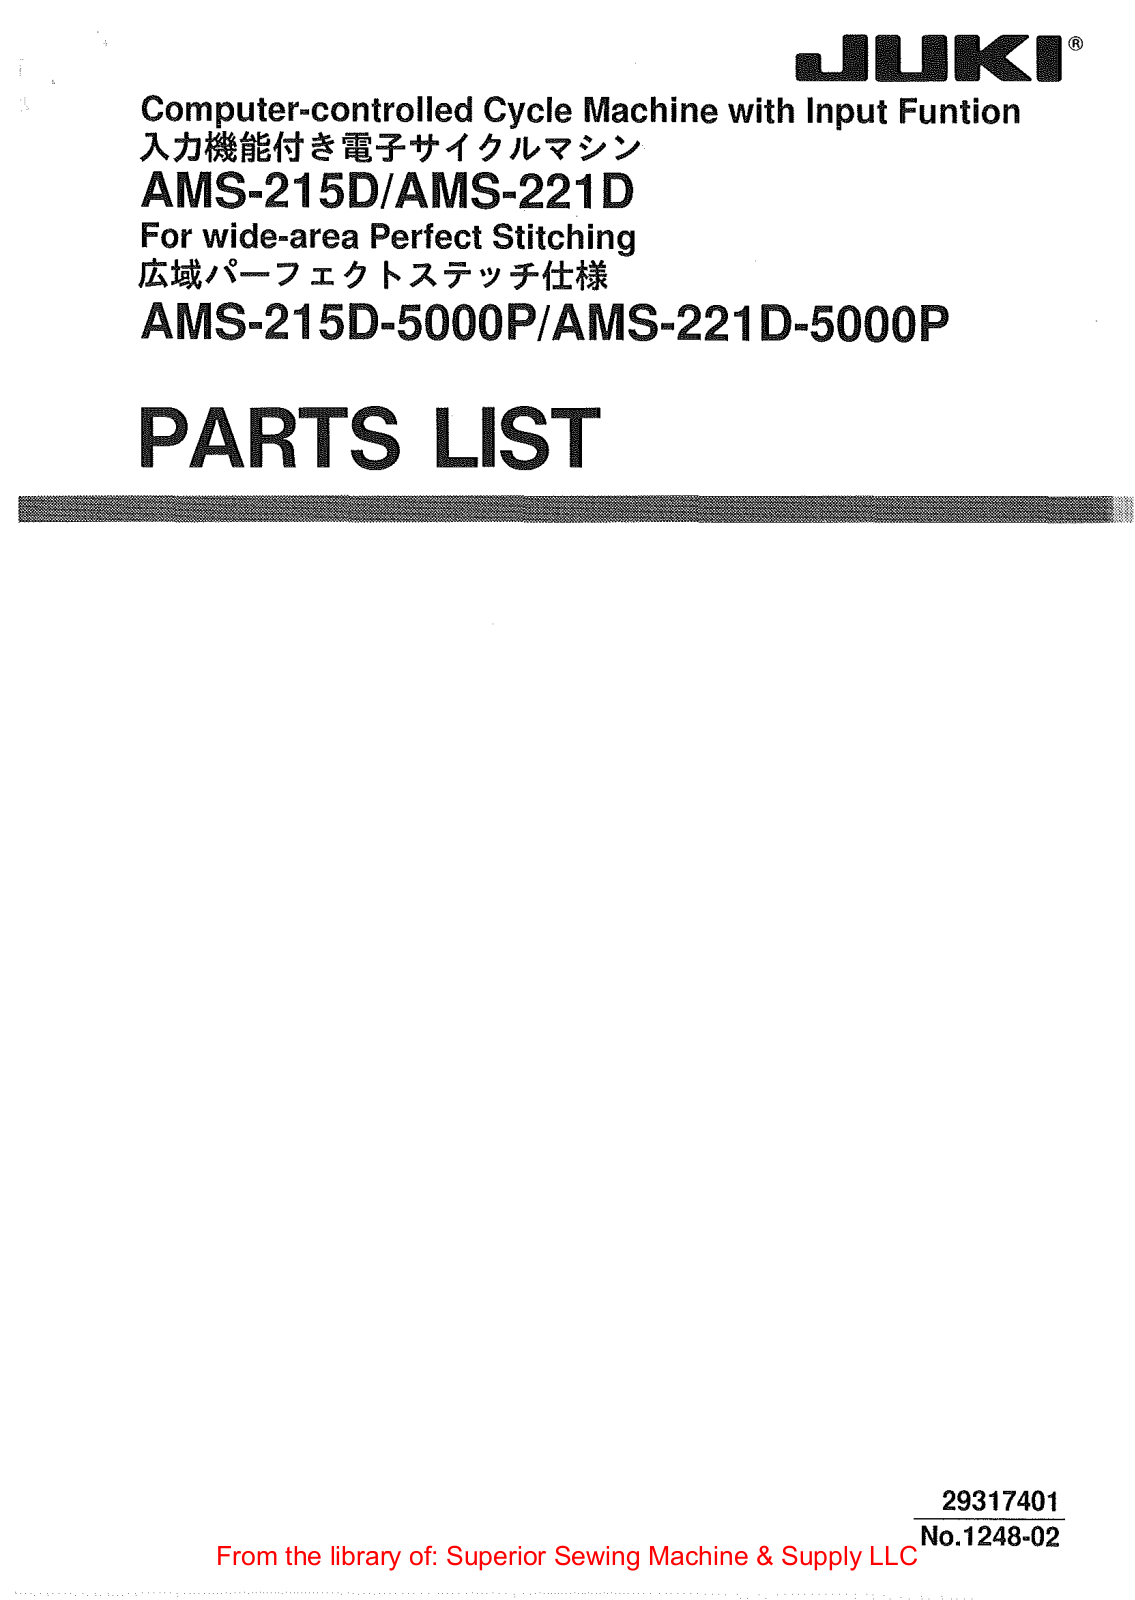 Juki AMS-215D, AMS-221D, AMS-2150-5000P, AMS-221D-5000P Manual